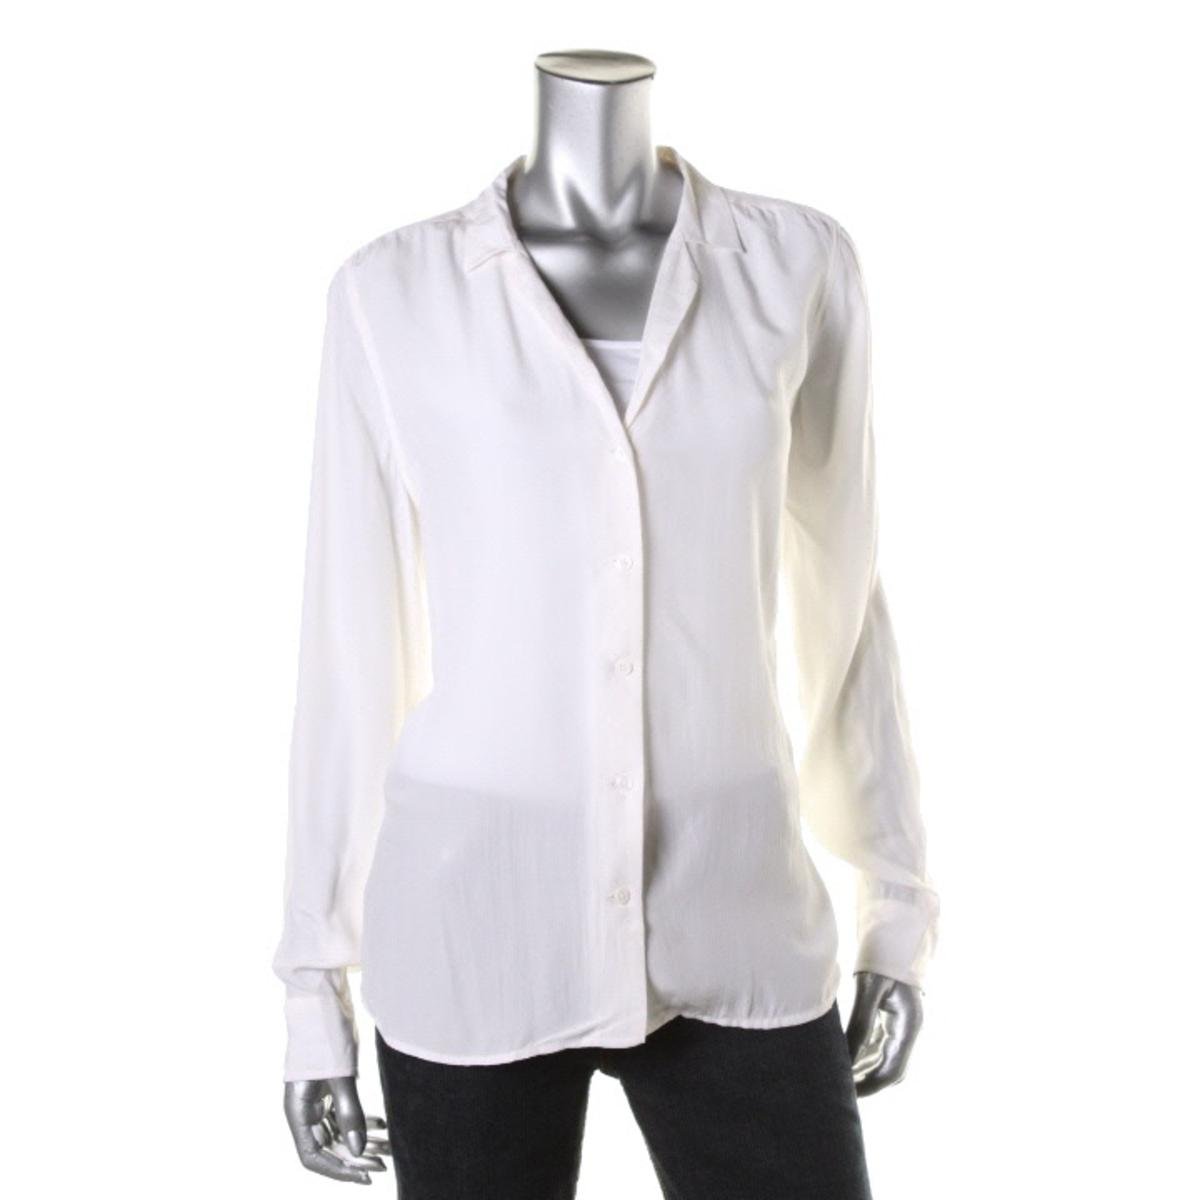 Equipment Femme 4906 Womens White Silk Long Sleeves Blouse Top M BHFO